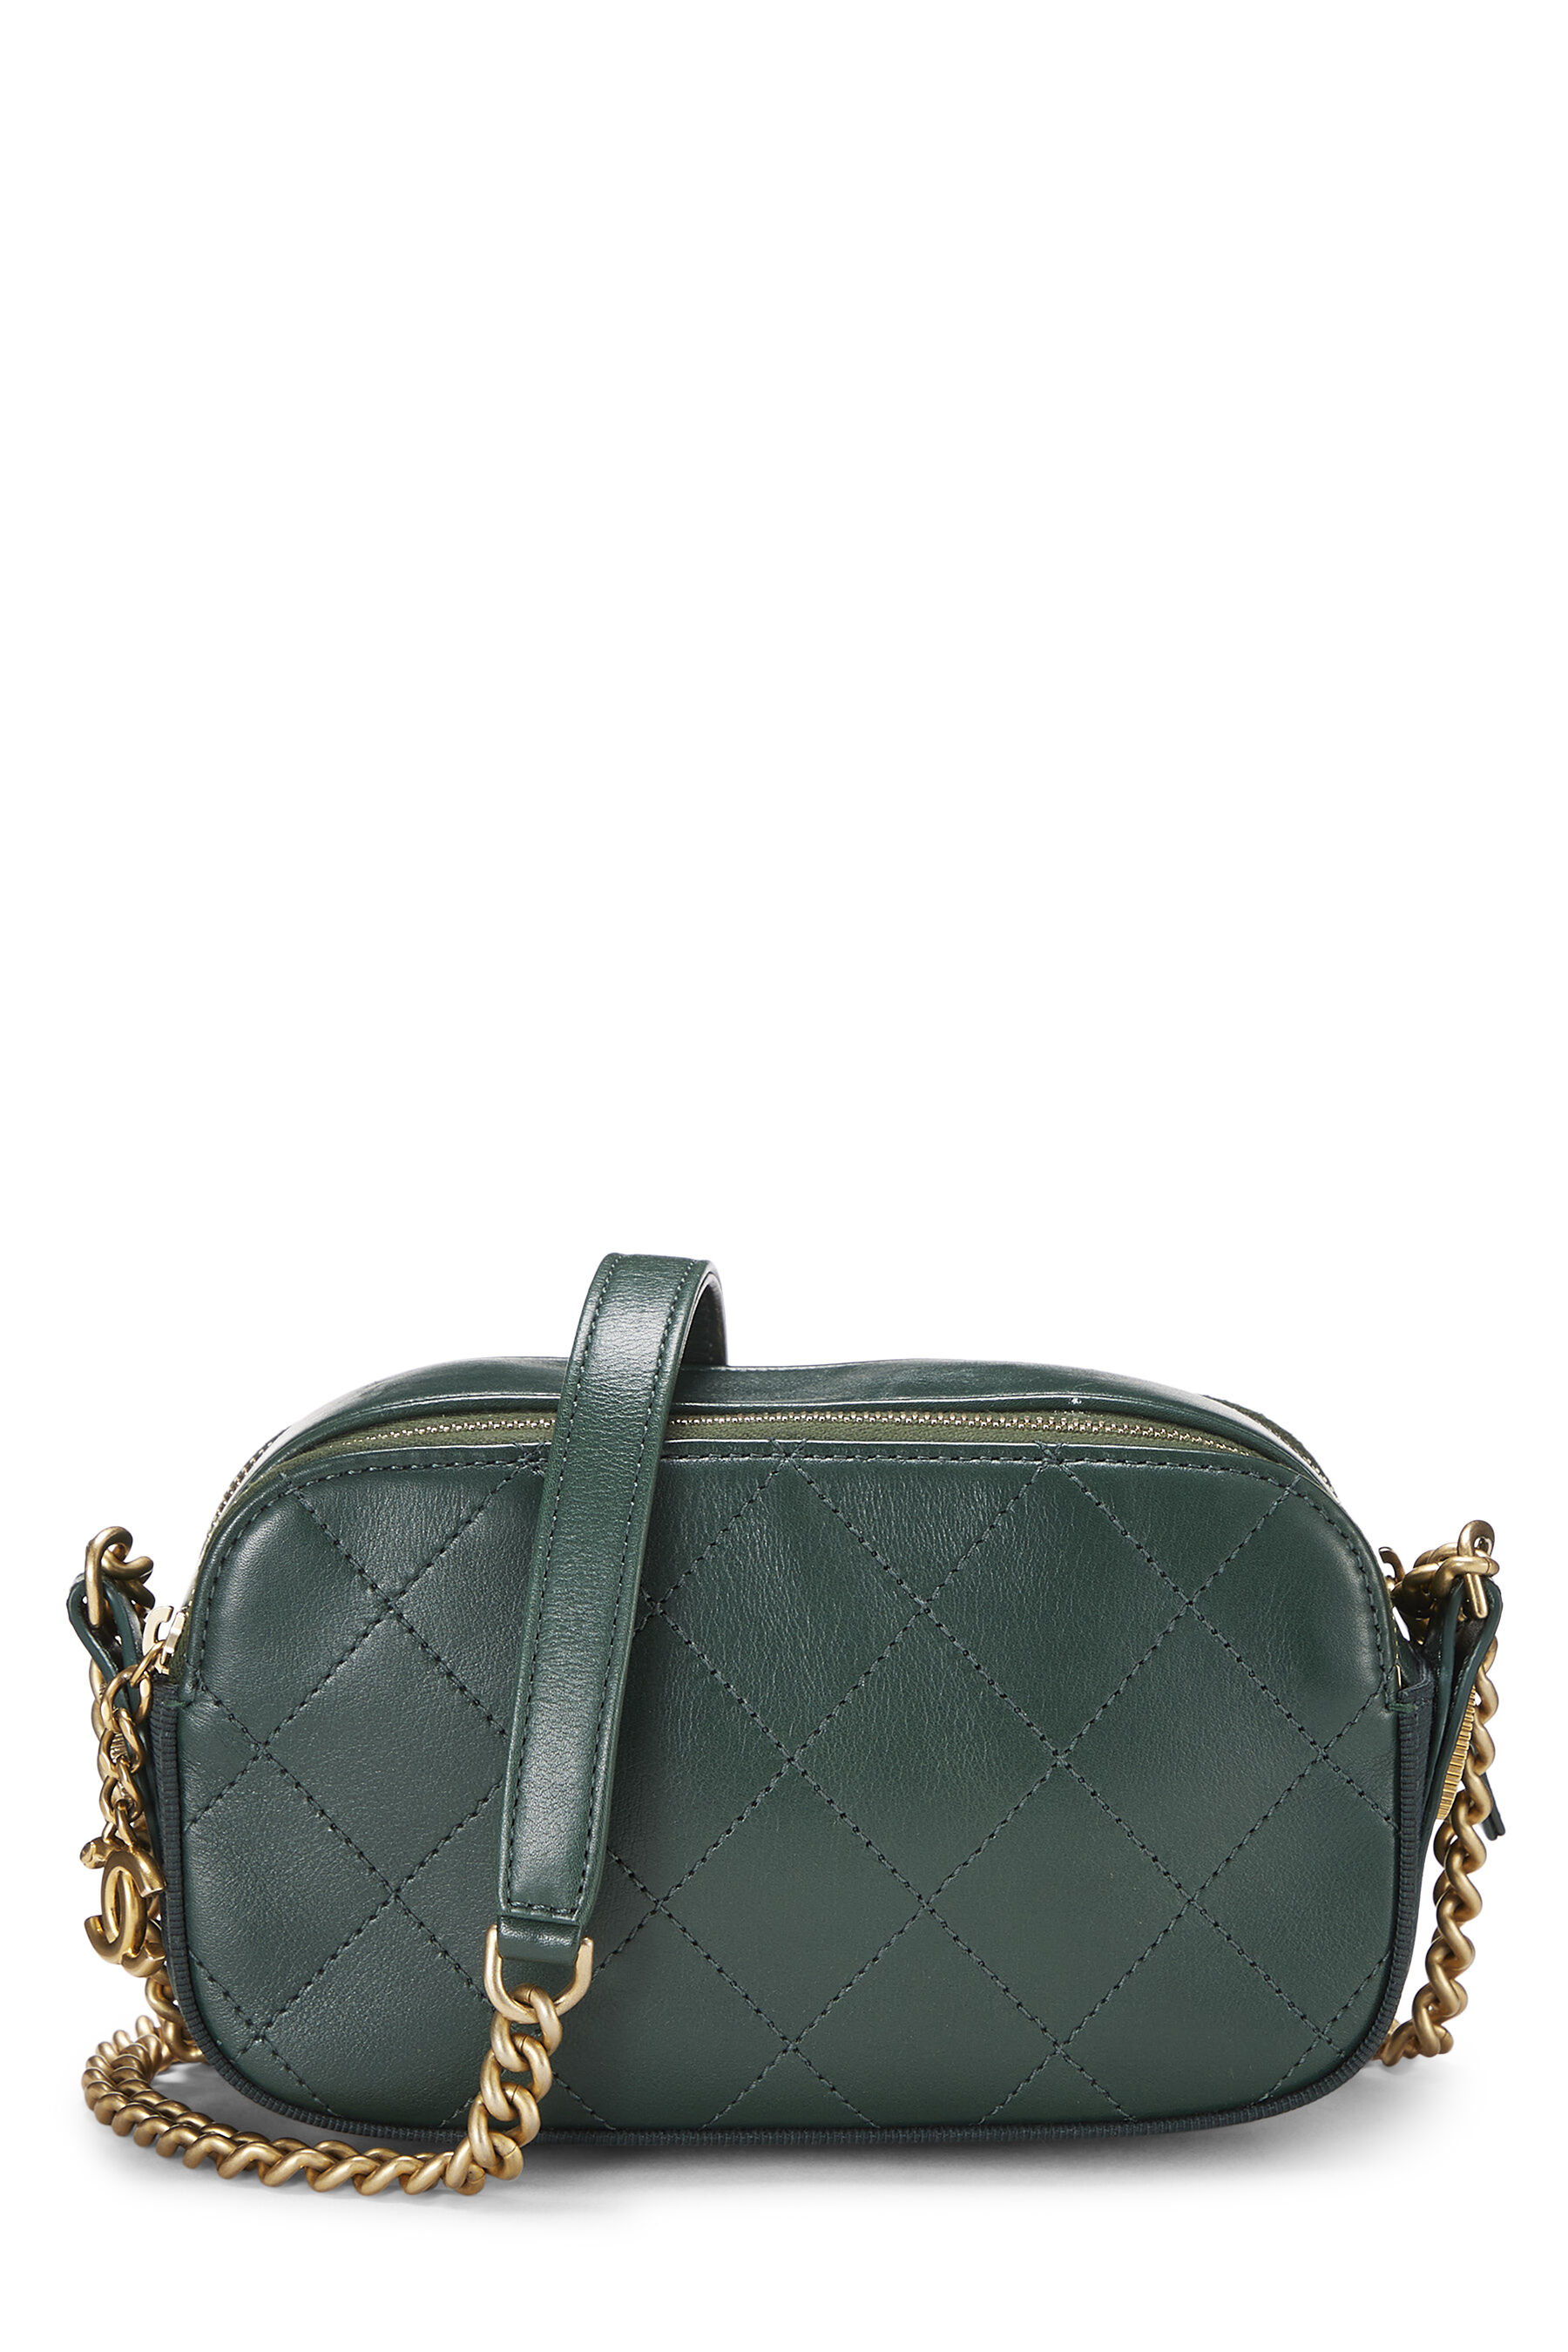 Chanel - Green Calfskin Double Zip Camera Bag